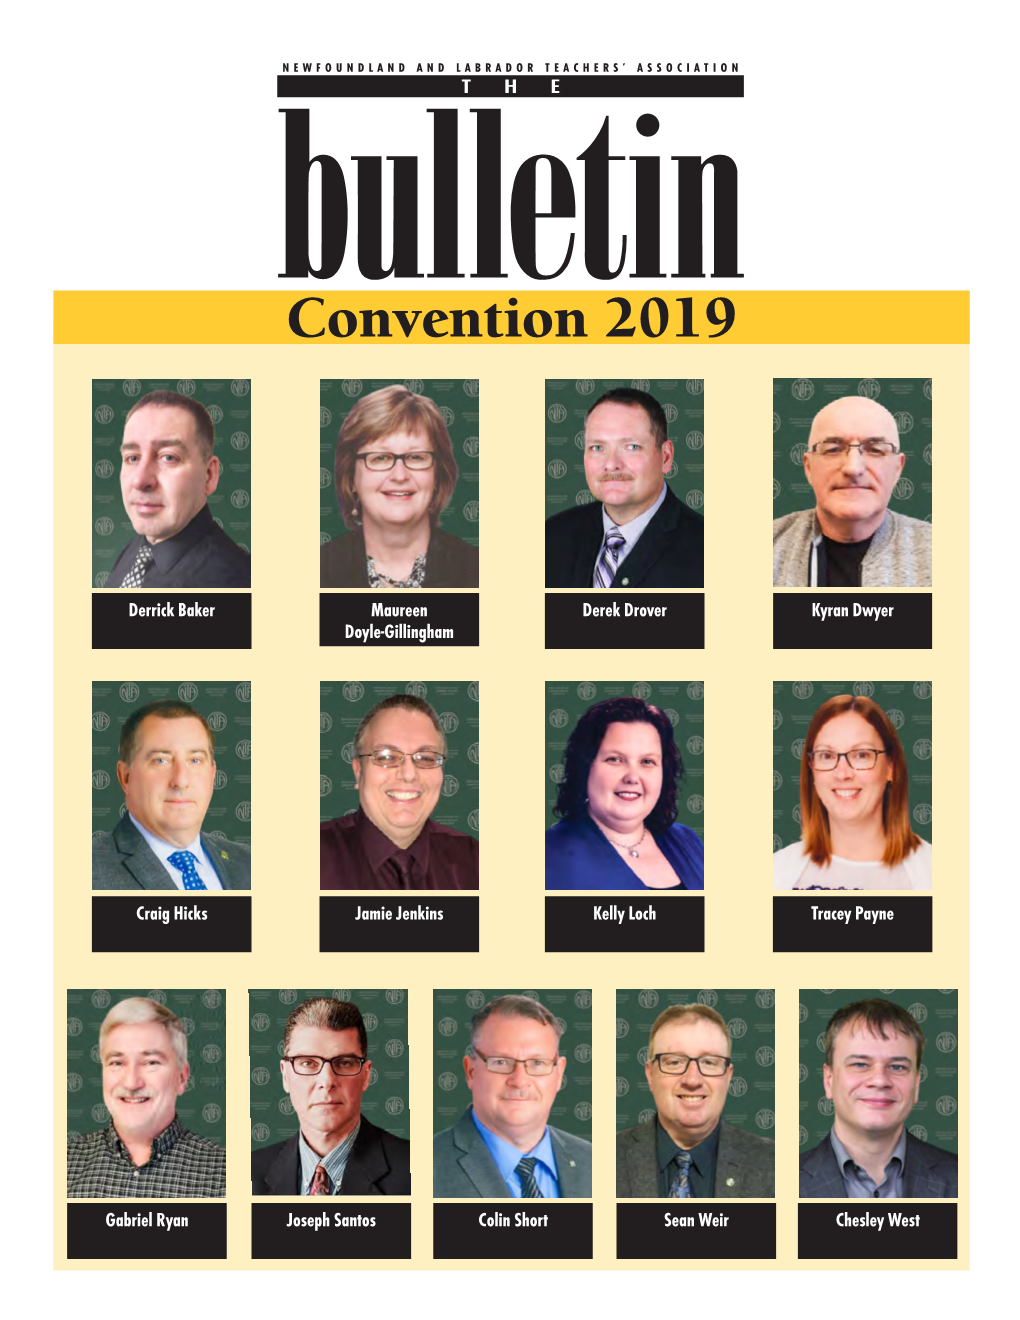 Convention Bulletin 2019 from the NL Teachers' Association